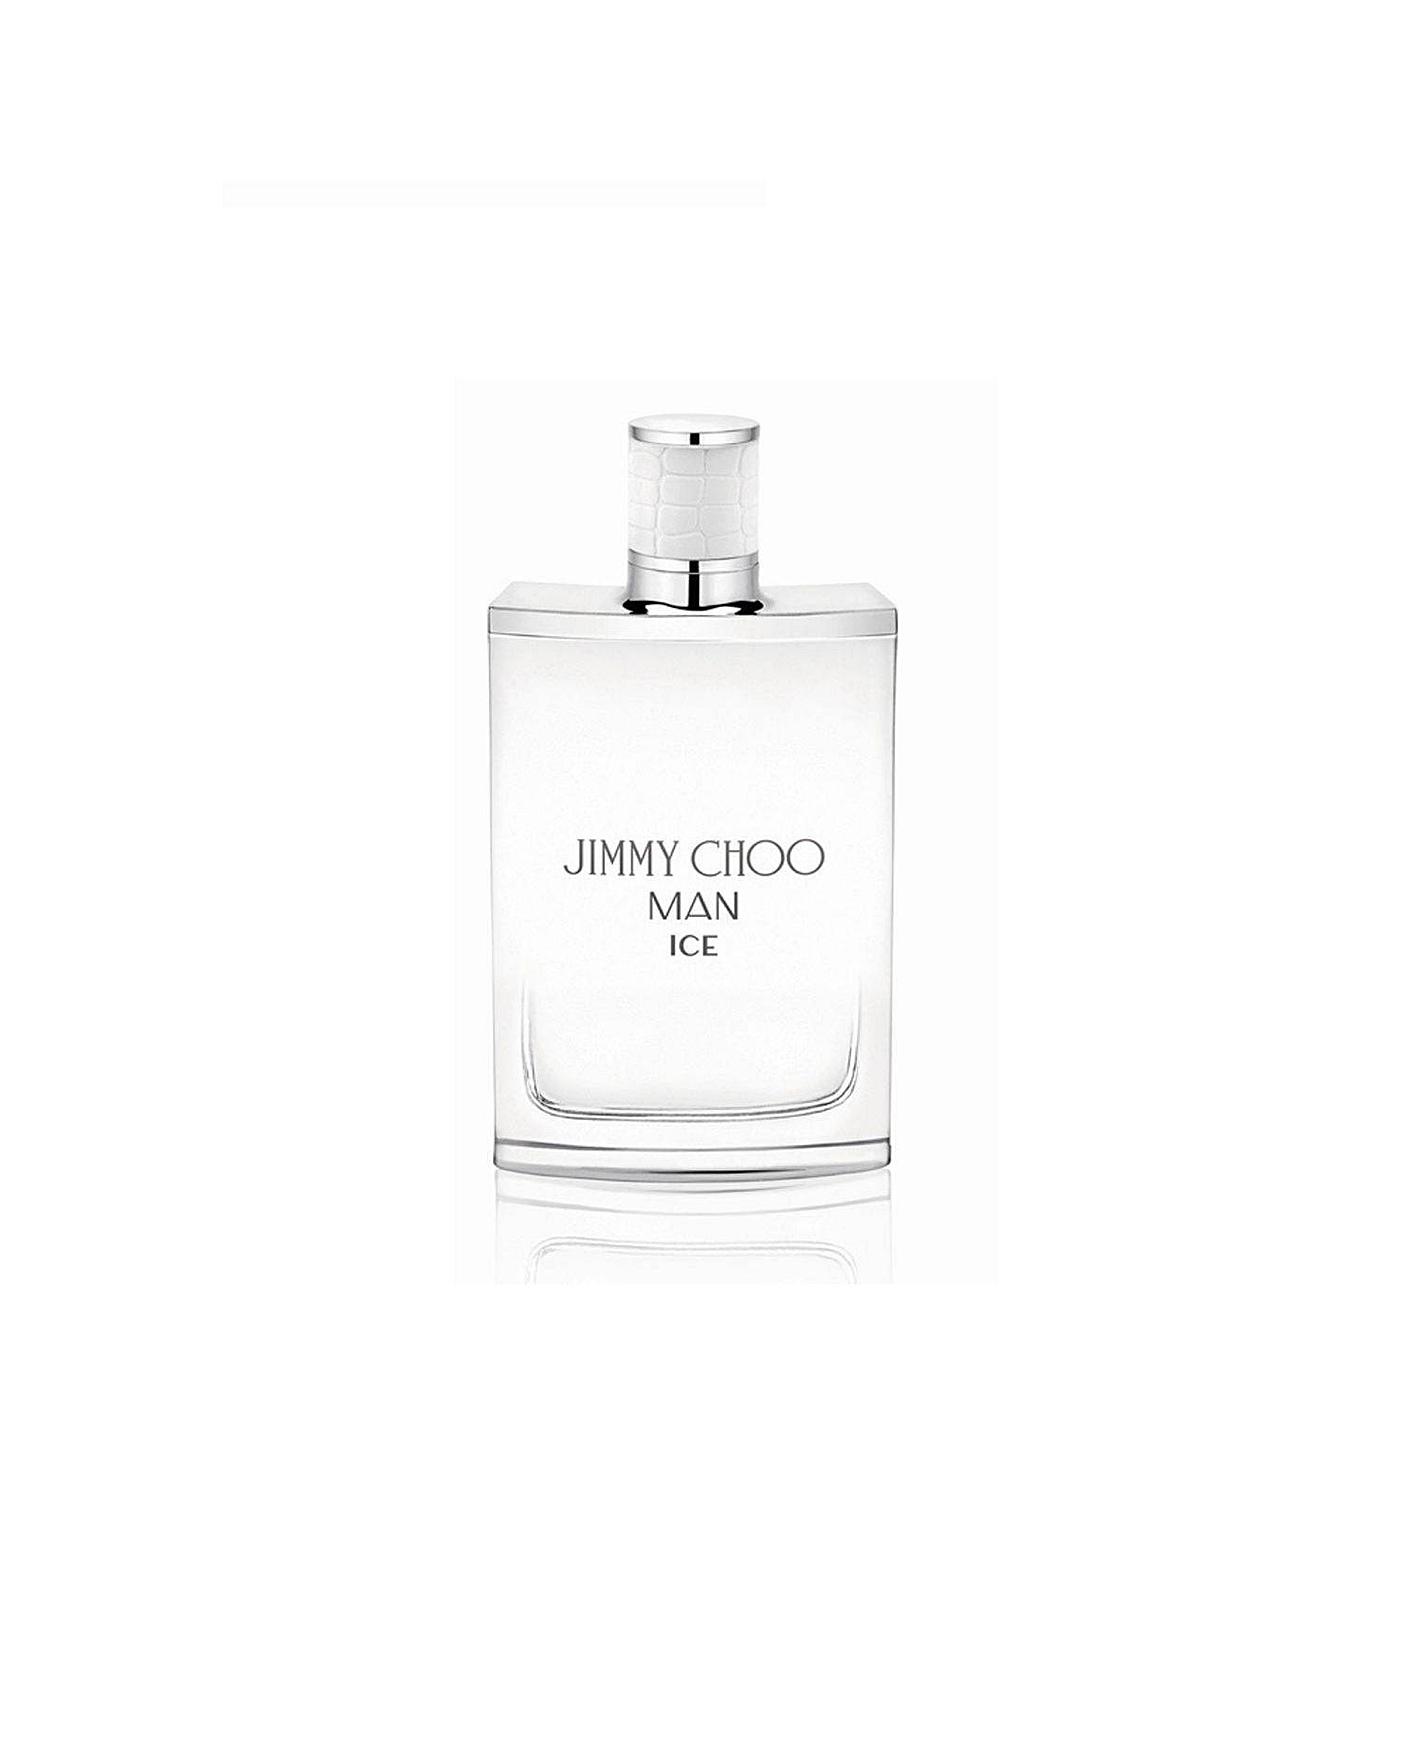 Jimmy Choo Ice by Jimmy Choo EDT Spray 3.3 oz